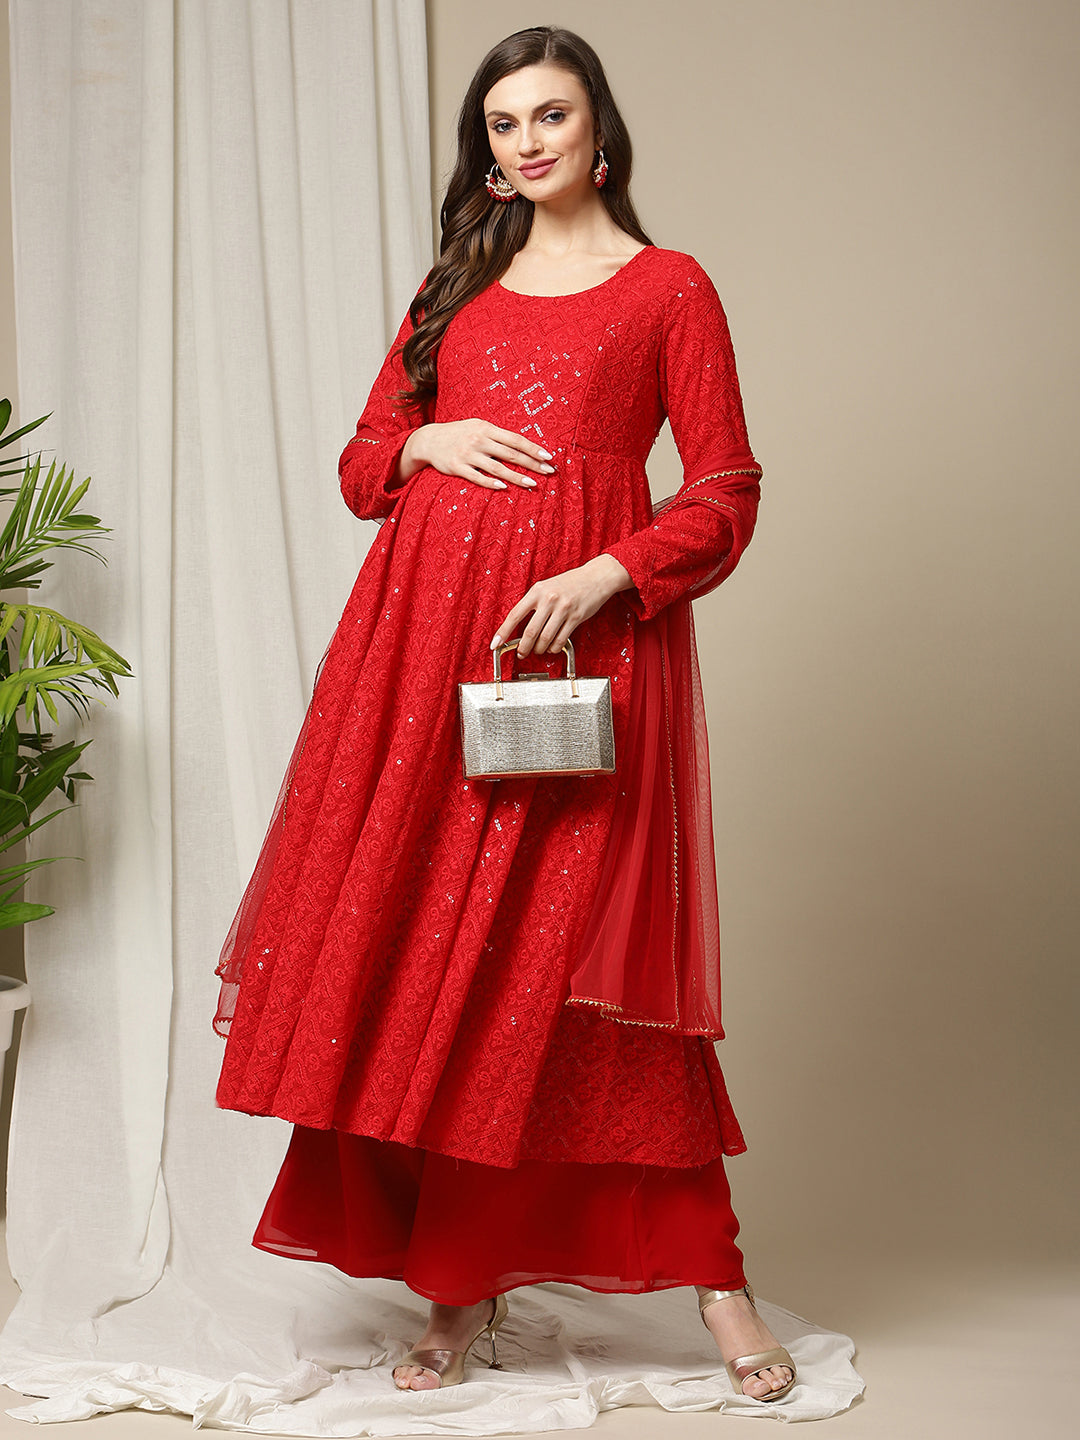 Pregnancy Indian attire inspo | Indian maternity wear, Indian maternity,  Indian wedding outfits